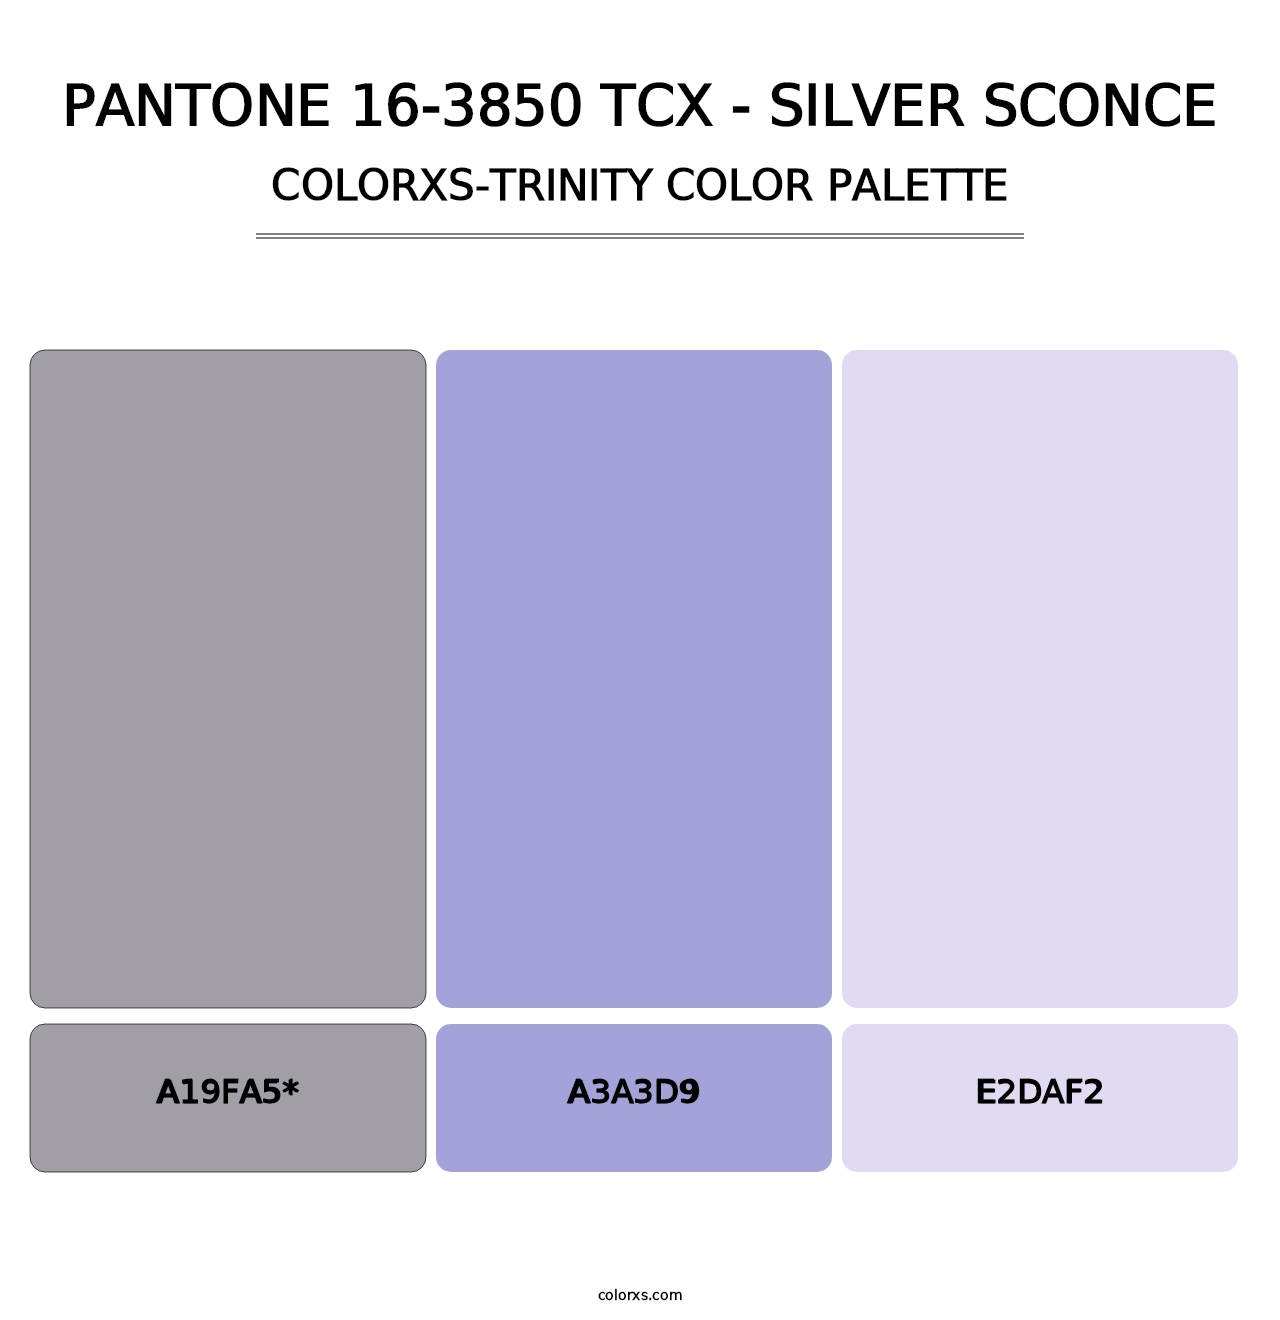 PANTONE 16-3850 TCX - Silver Sconce - Colorxs Trinity Palette